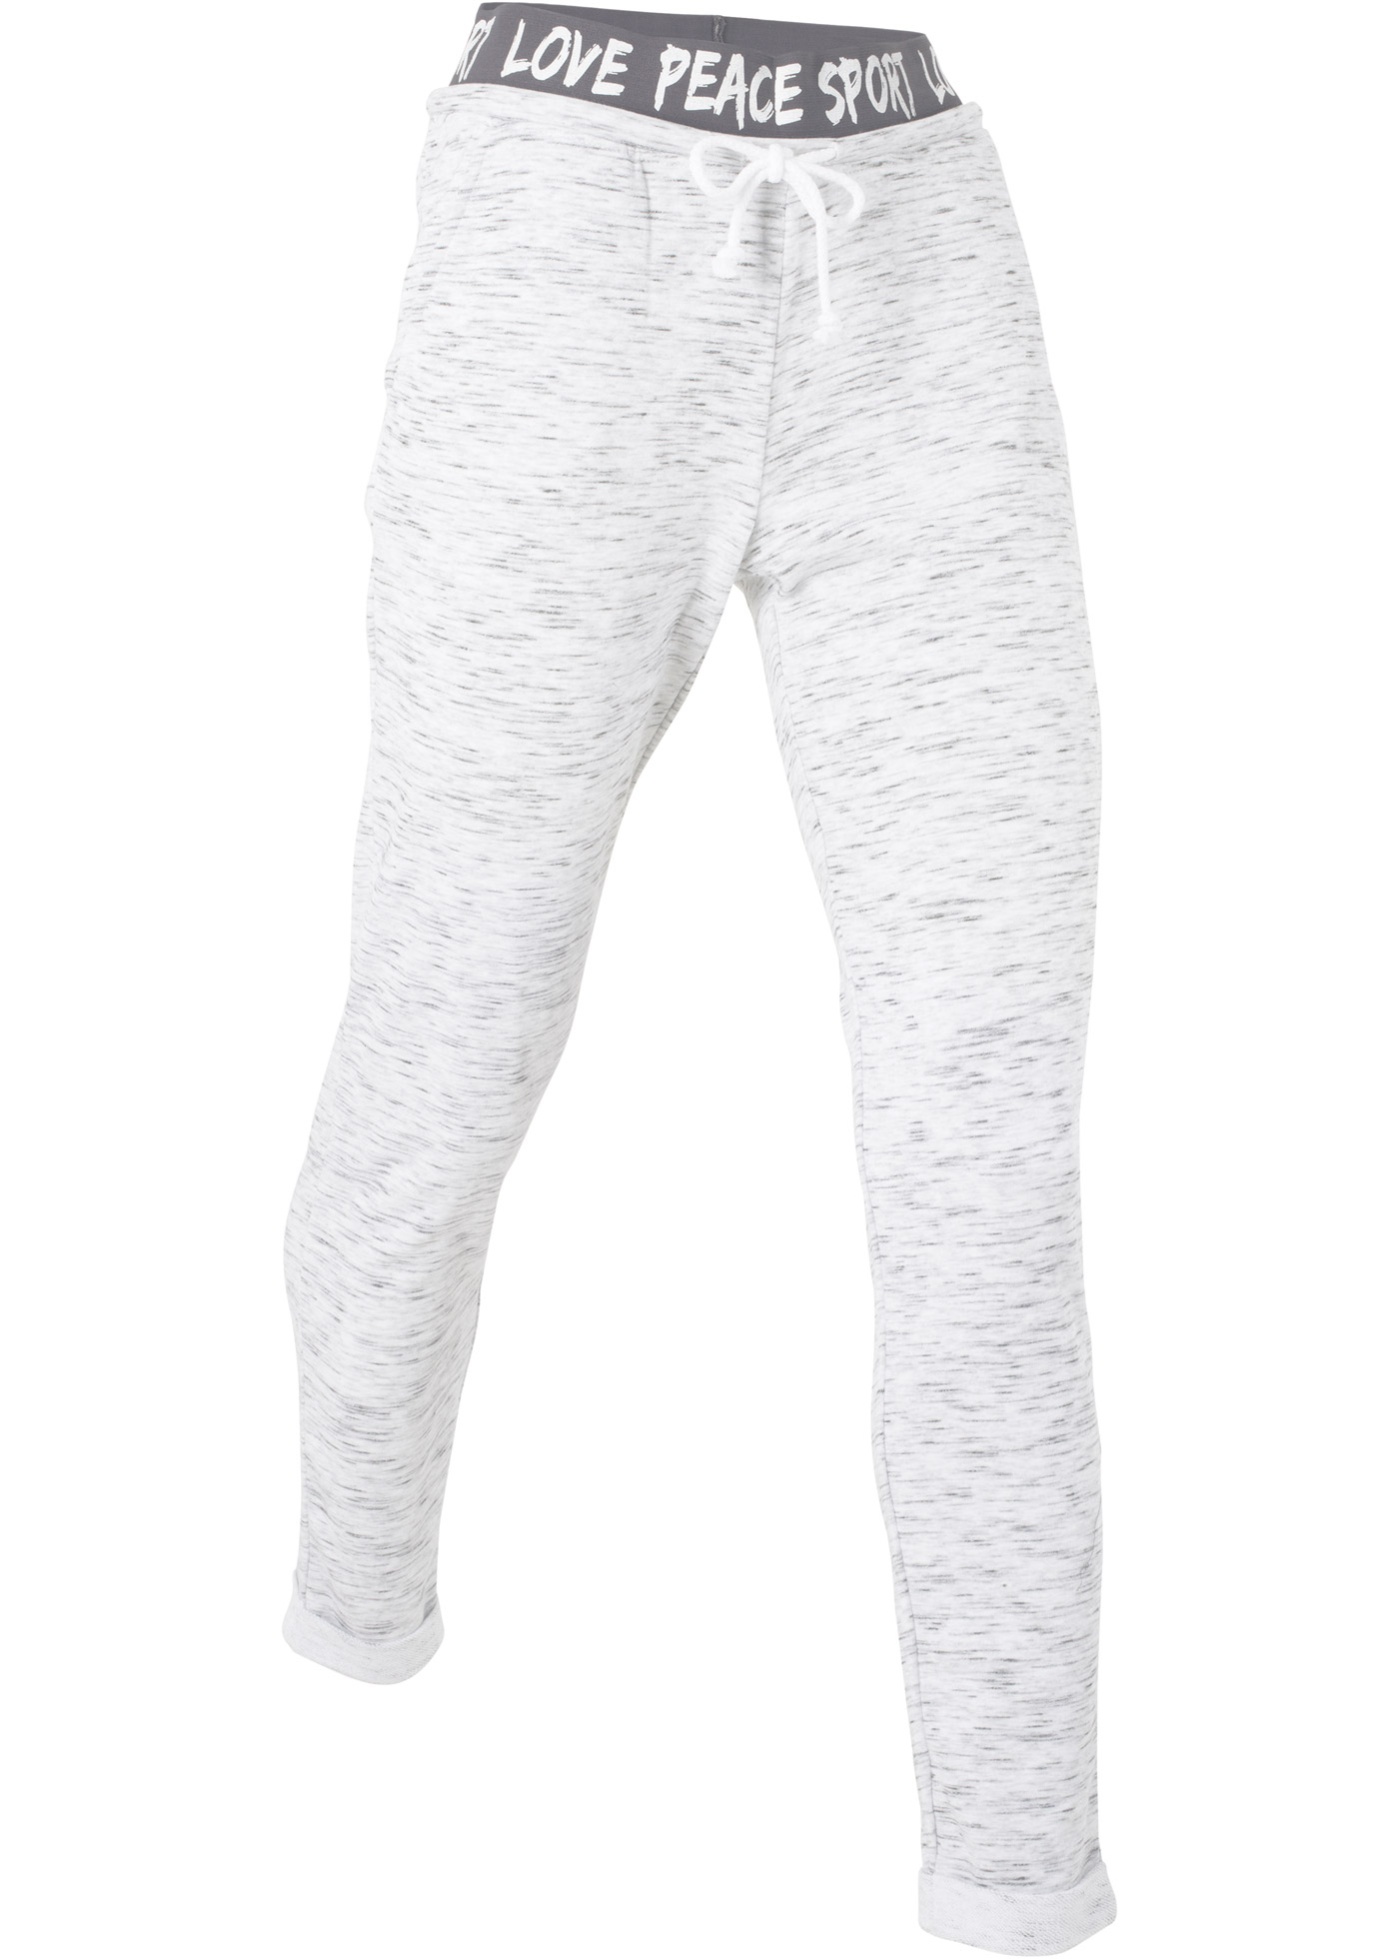 Pantalone da jogging leggero (Bianco) - bpc bonprix collection